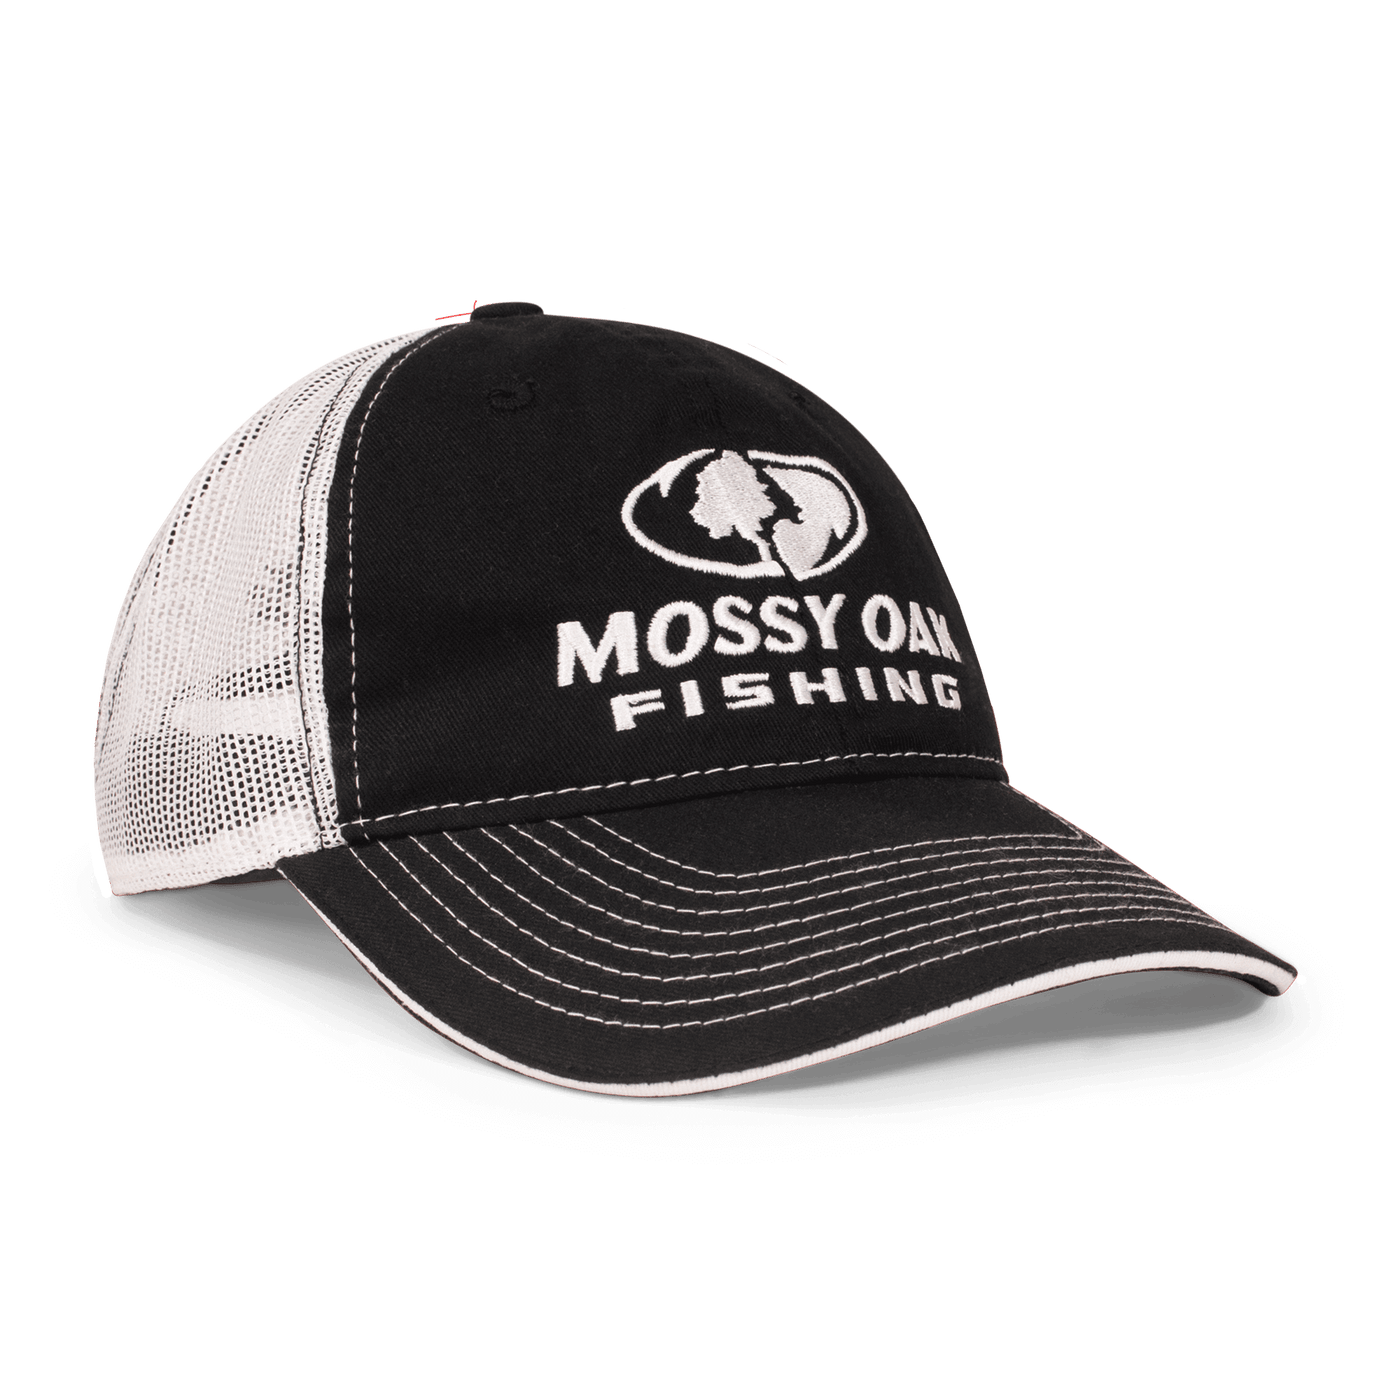 NWT Mossy Oak Fishing Snapback Hat Outdoor Cap Black with Blue Bottom Bill